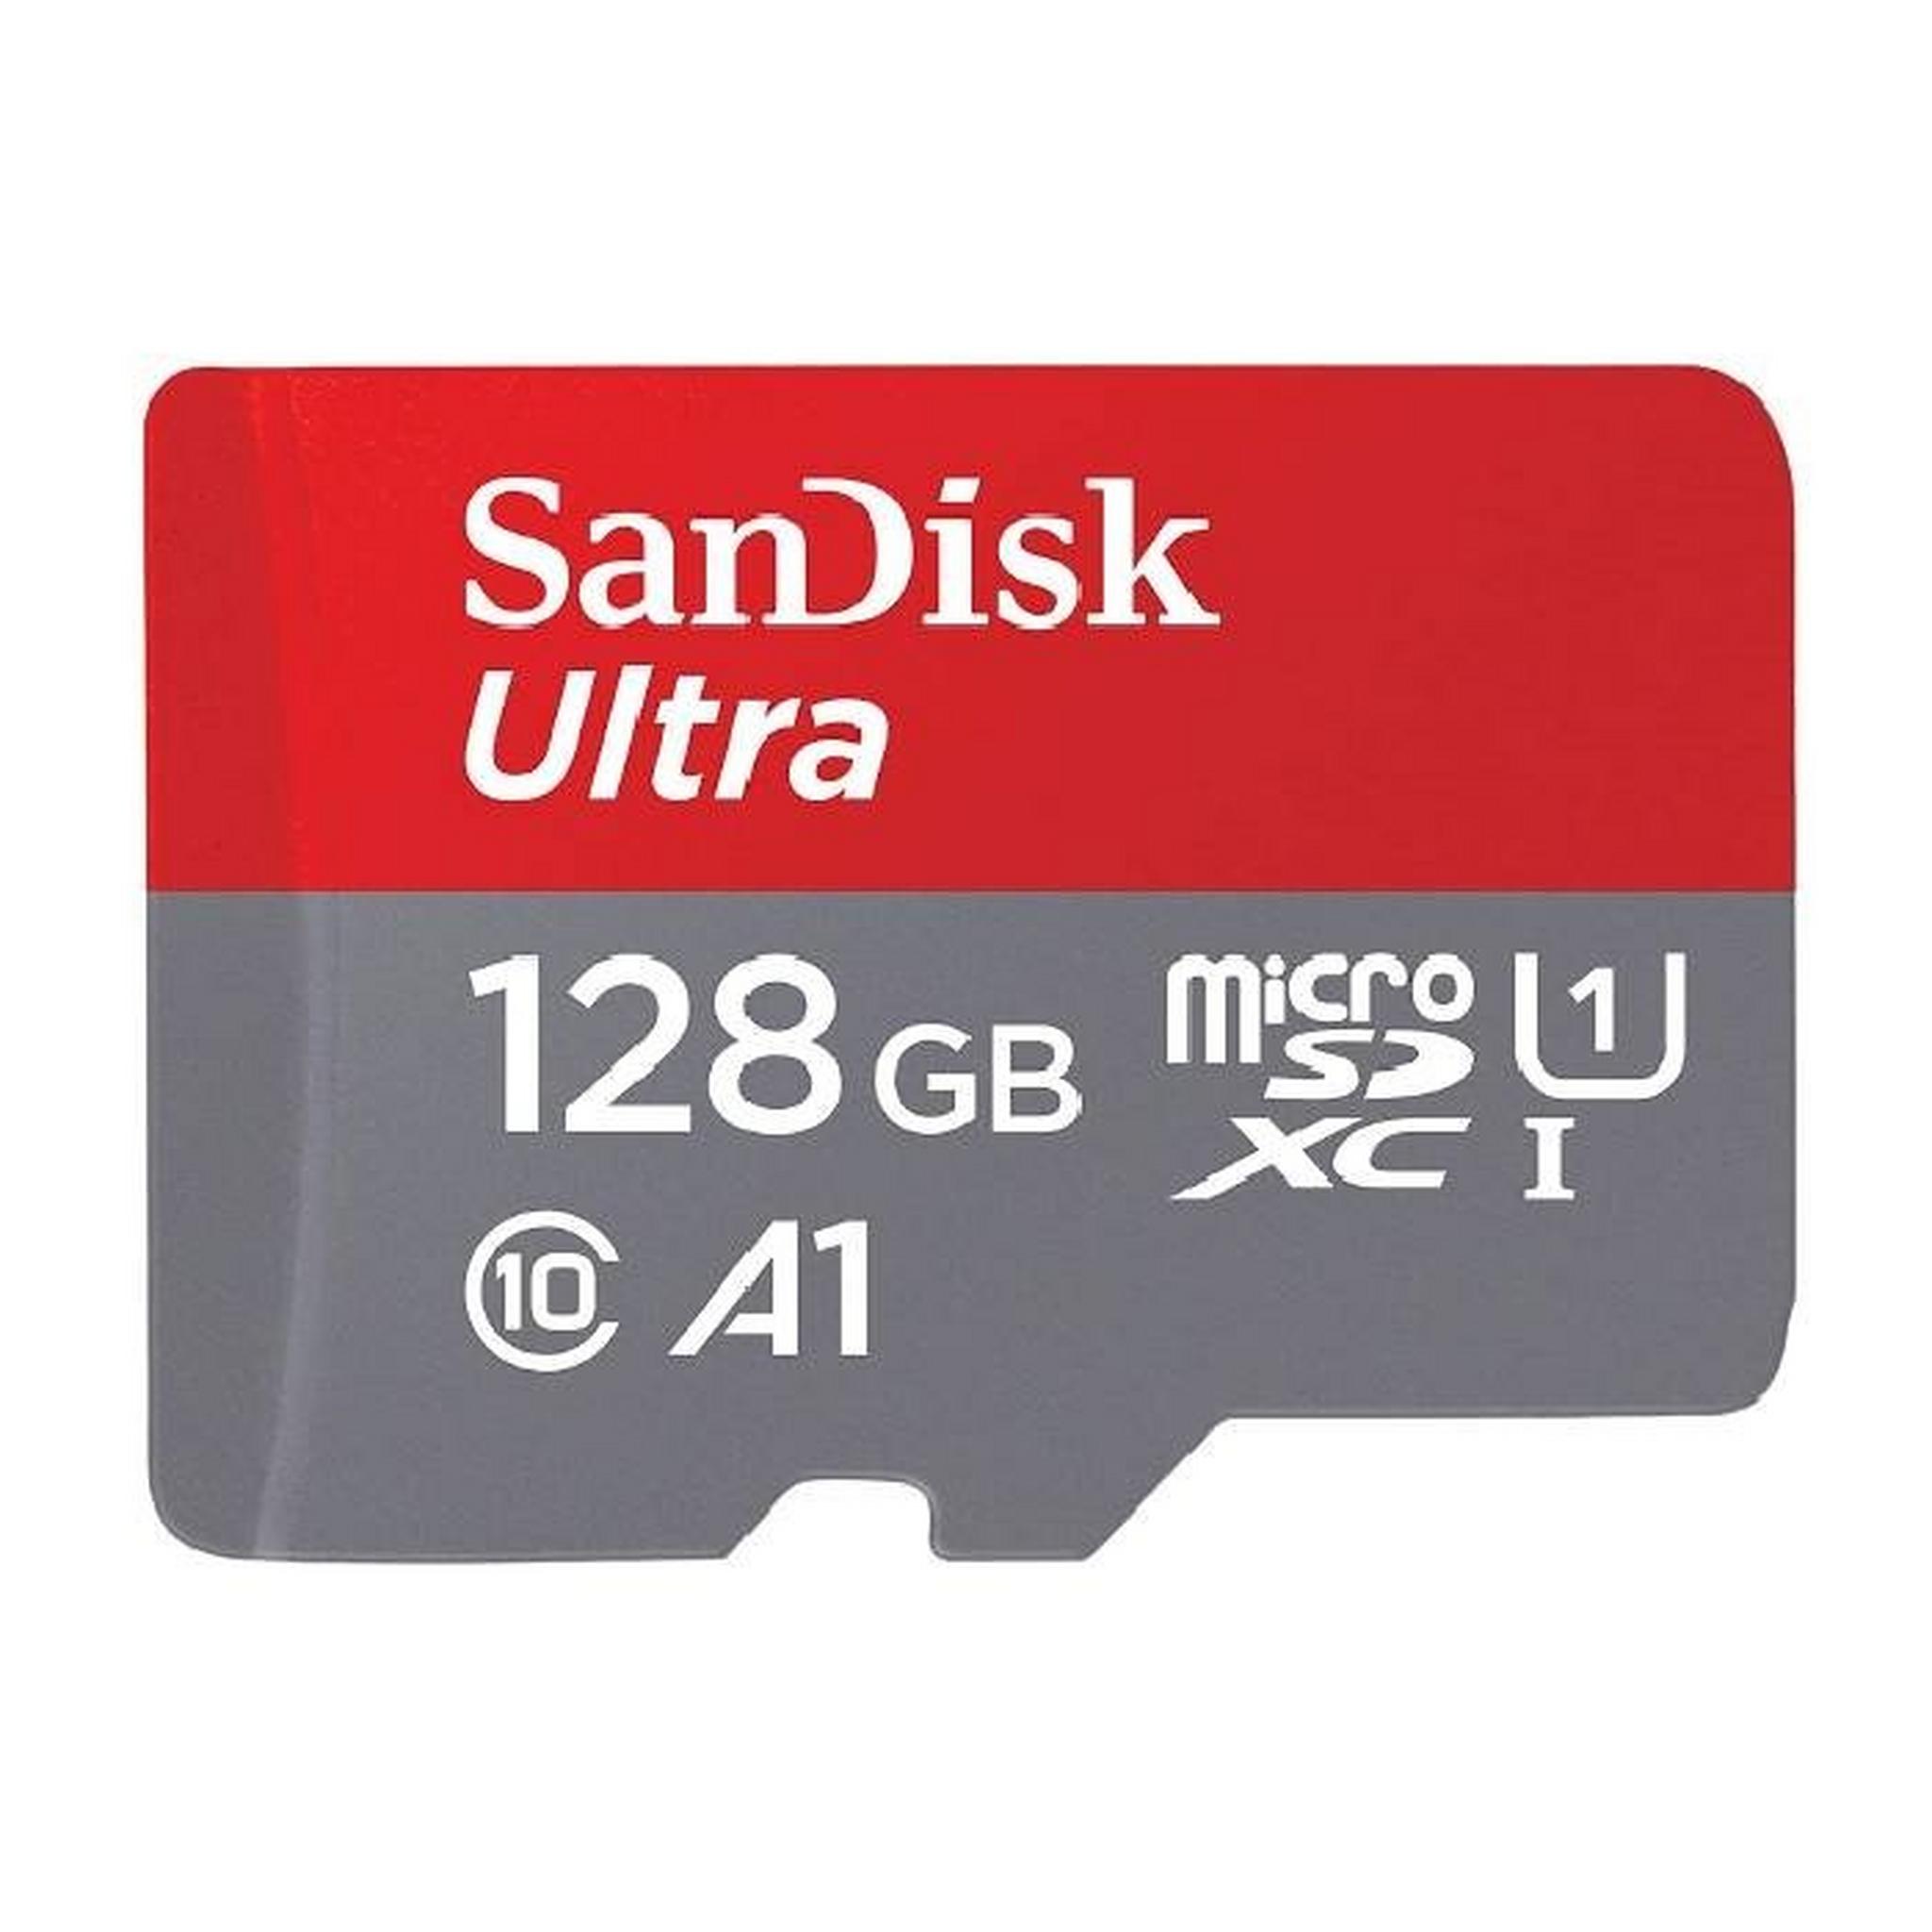 SanDisk Ultra MicroSDXC 128GB UHS-I 120MB/S Memory Card